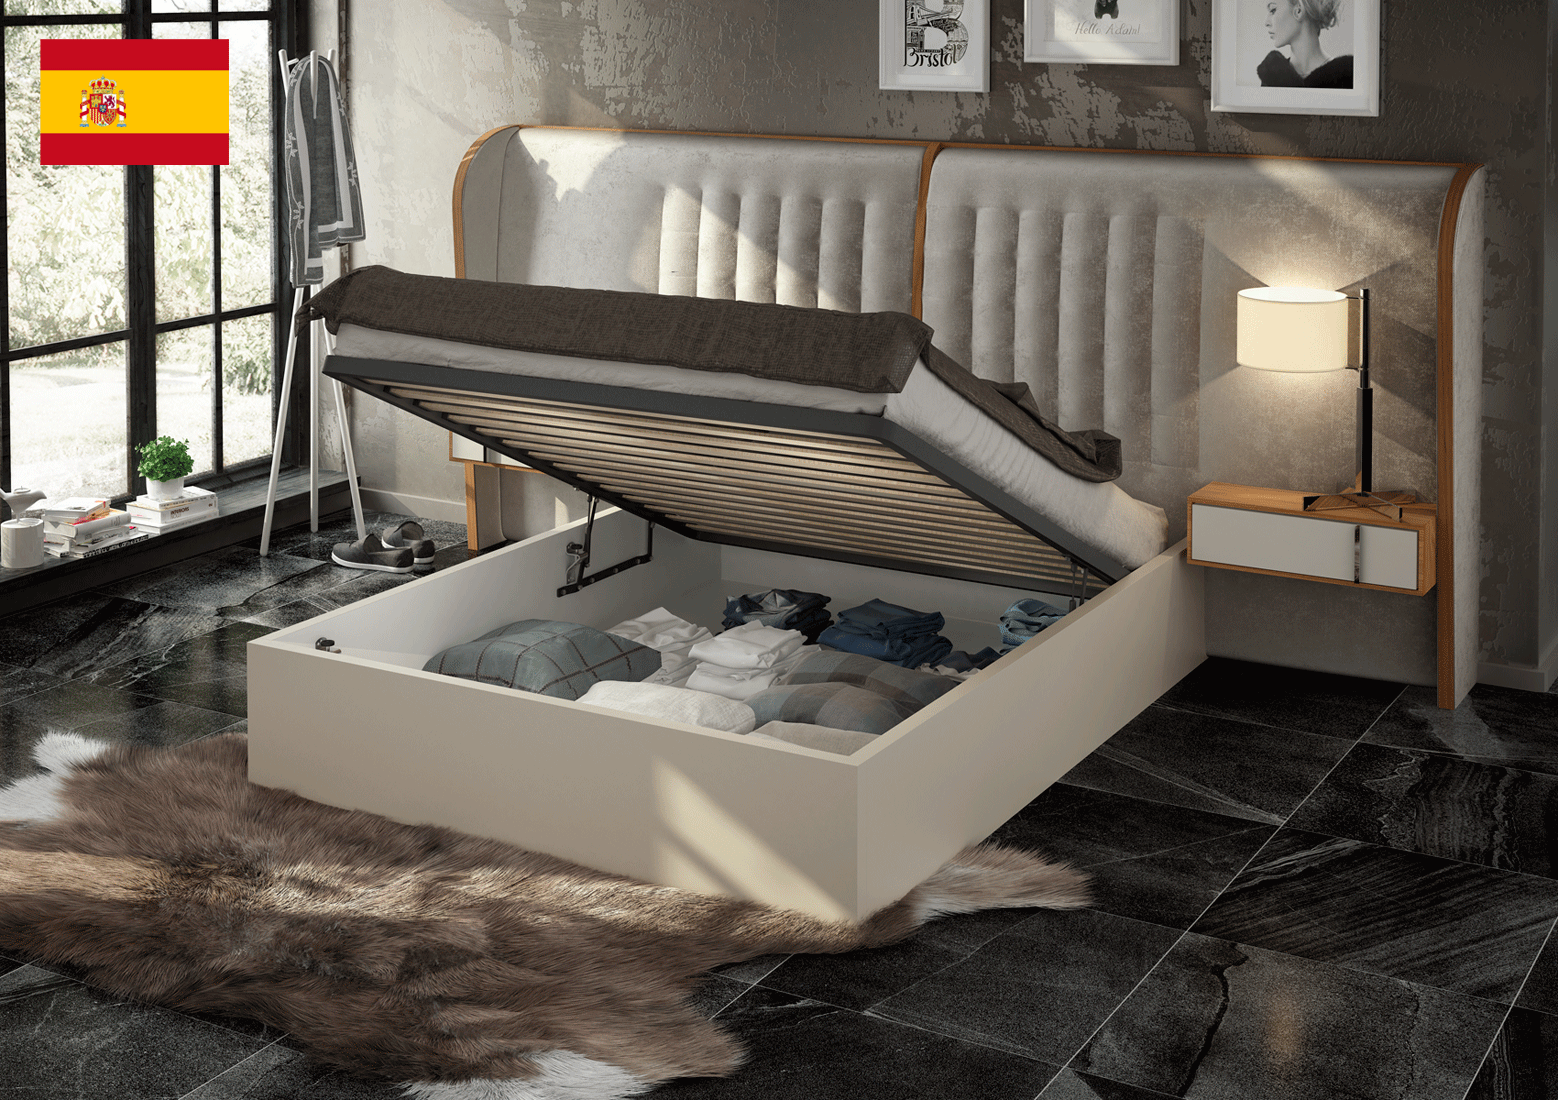 Bedroom Furniture Beds with storage Cadiz Bedroom, Made in Spain